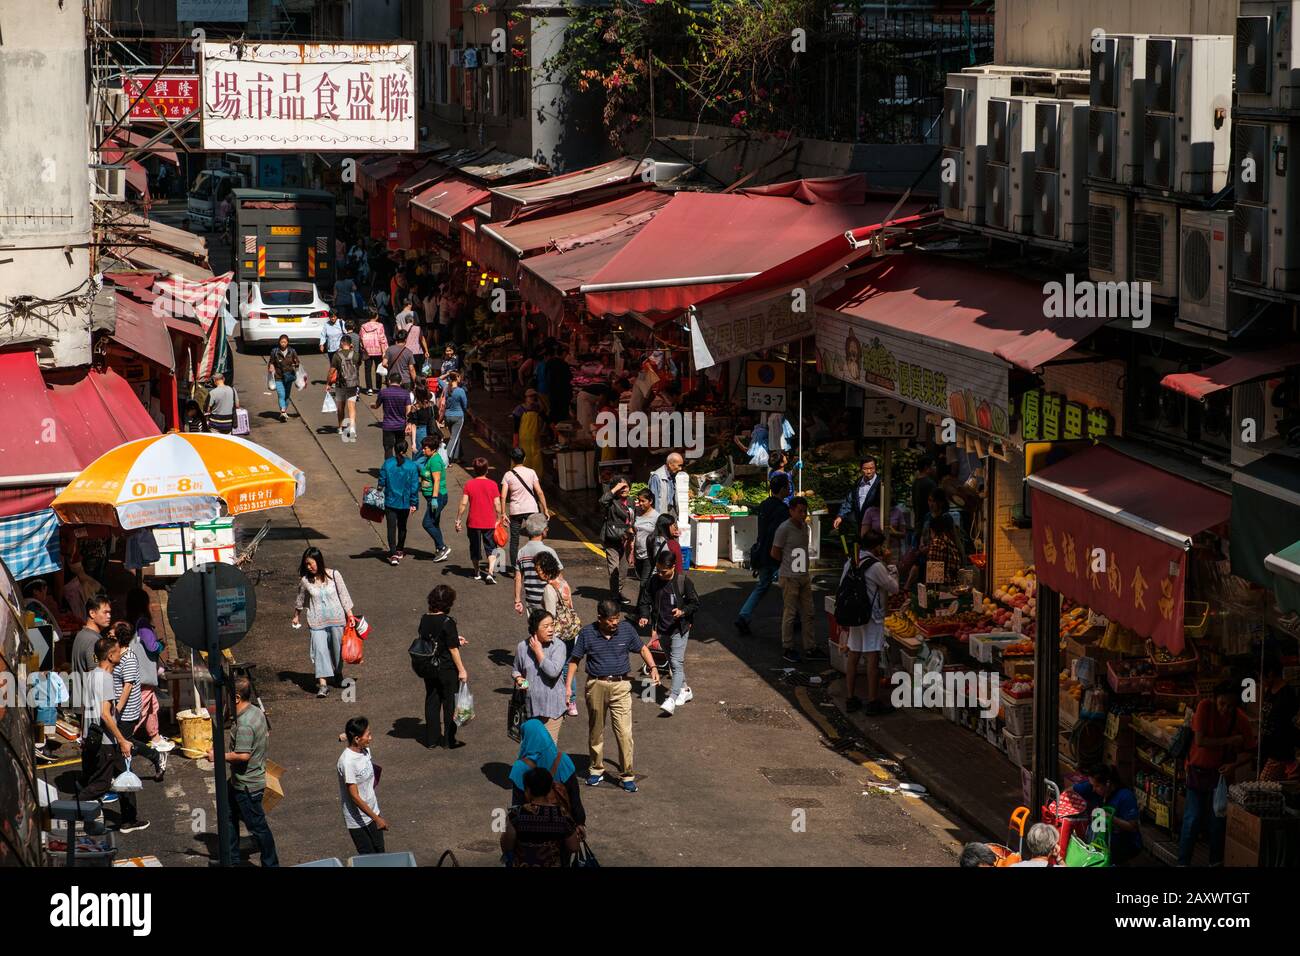 Hong Kong, novembre 2019: Persone sul mercato stradale che acquistano e vendono cibo a Hong Kong, Cina Foto Stock